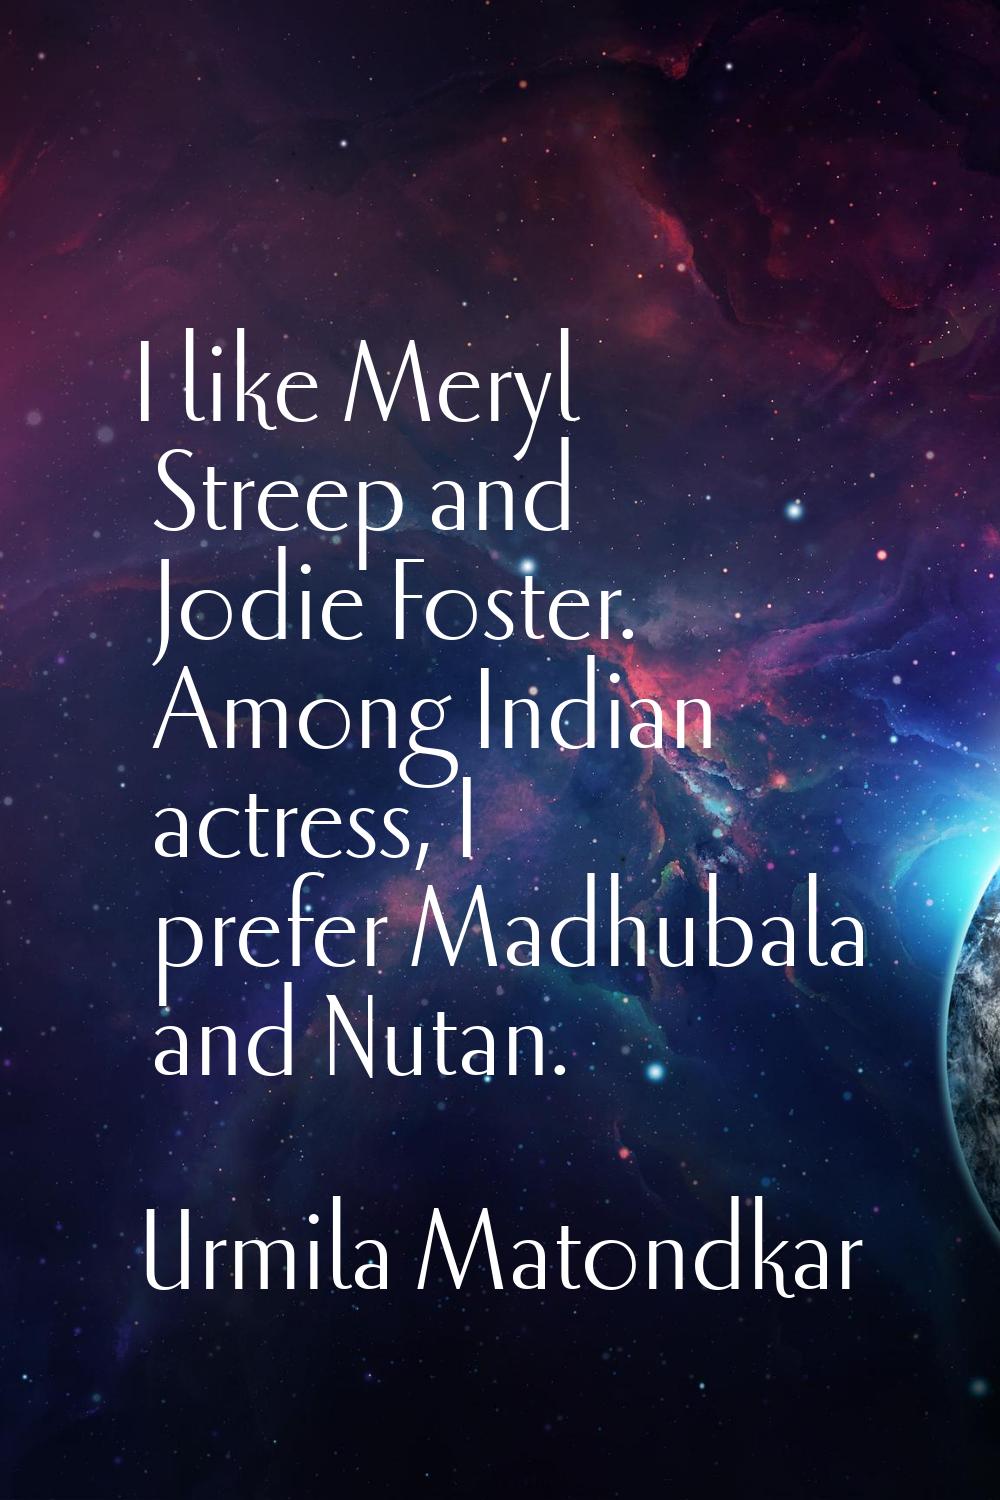 I like Meryl Streep and Jodie Foster. Among Indian actress, I prefer Madhubala and Nutan.